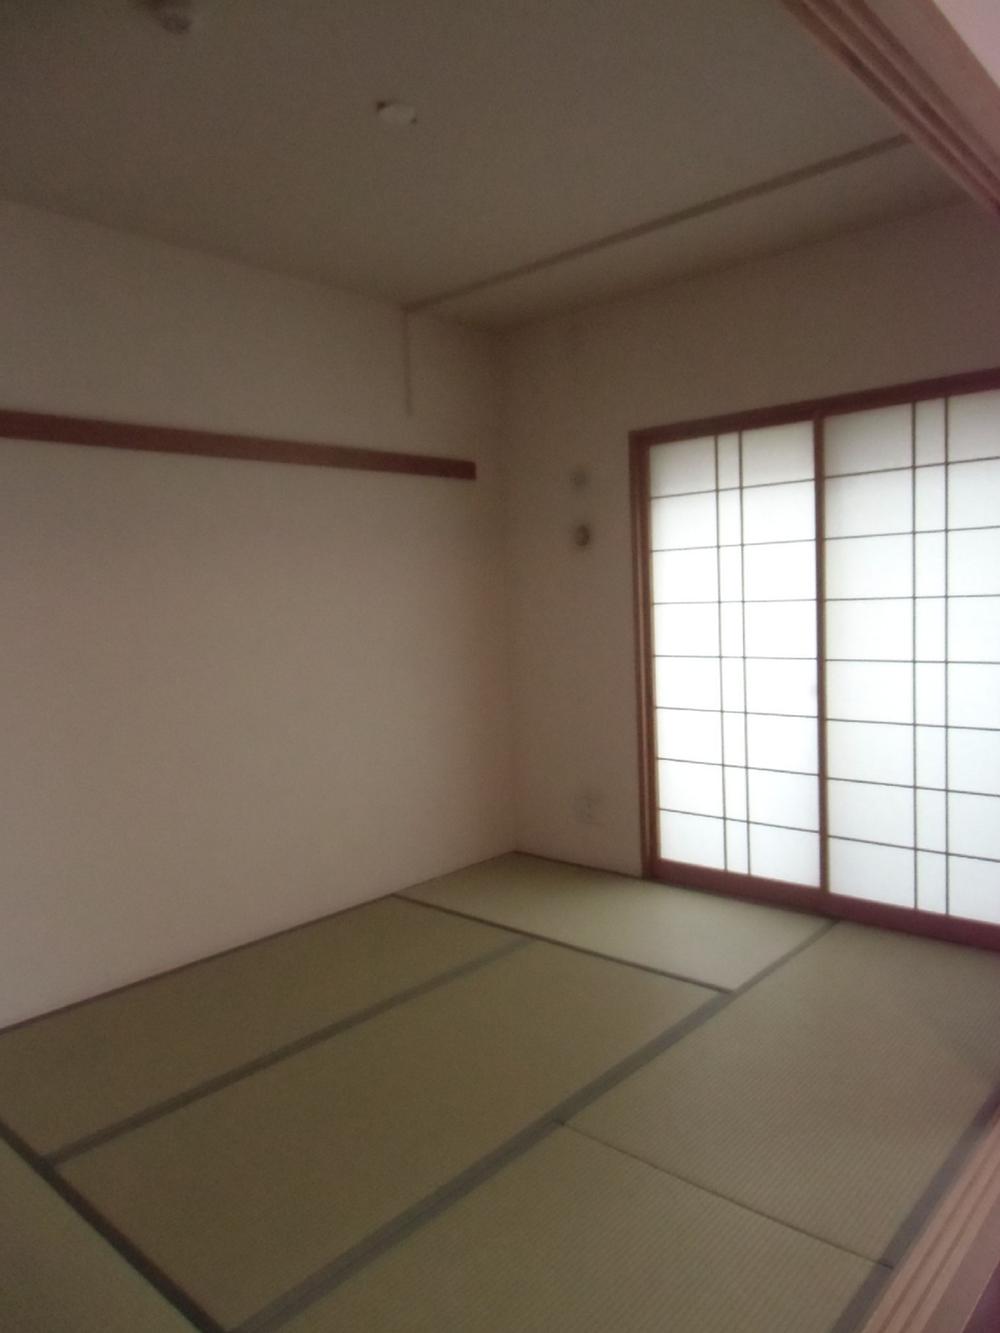 Non-living room. Japanese-style room (2013 November) shooting